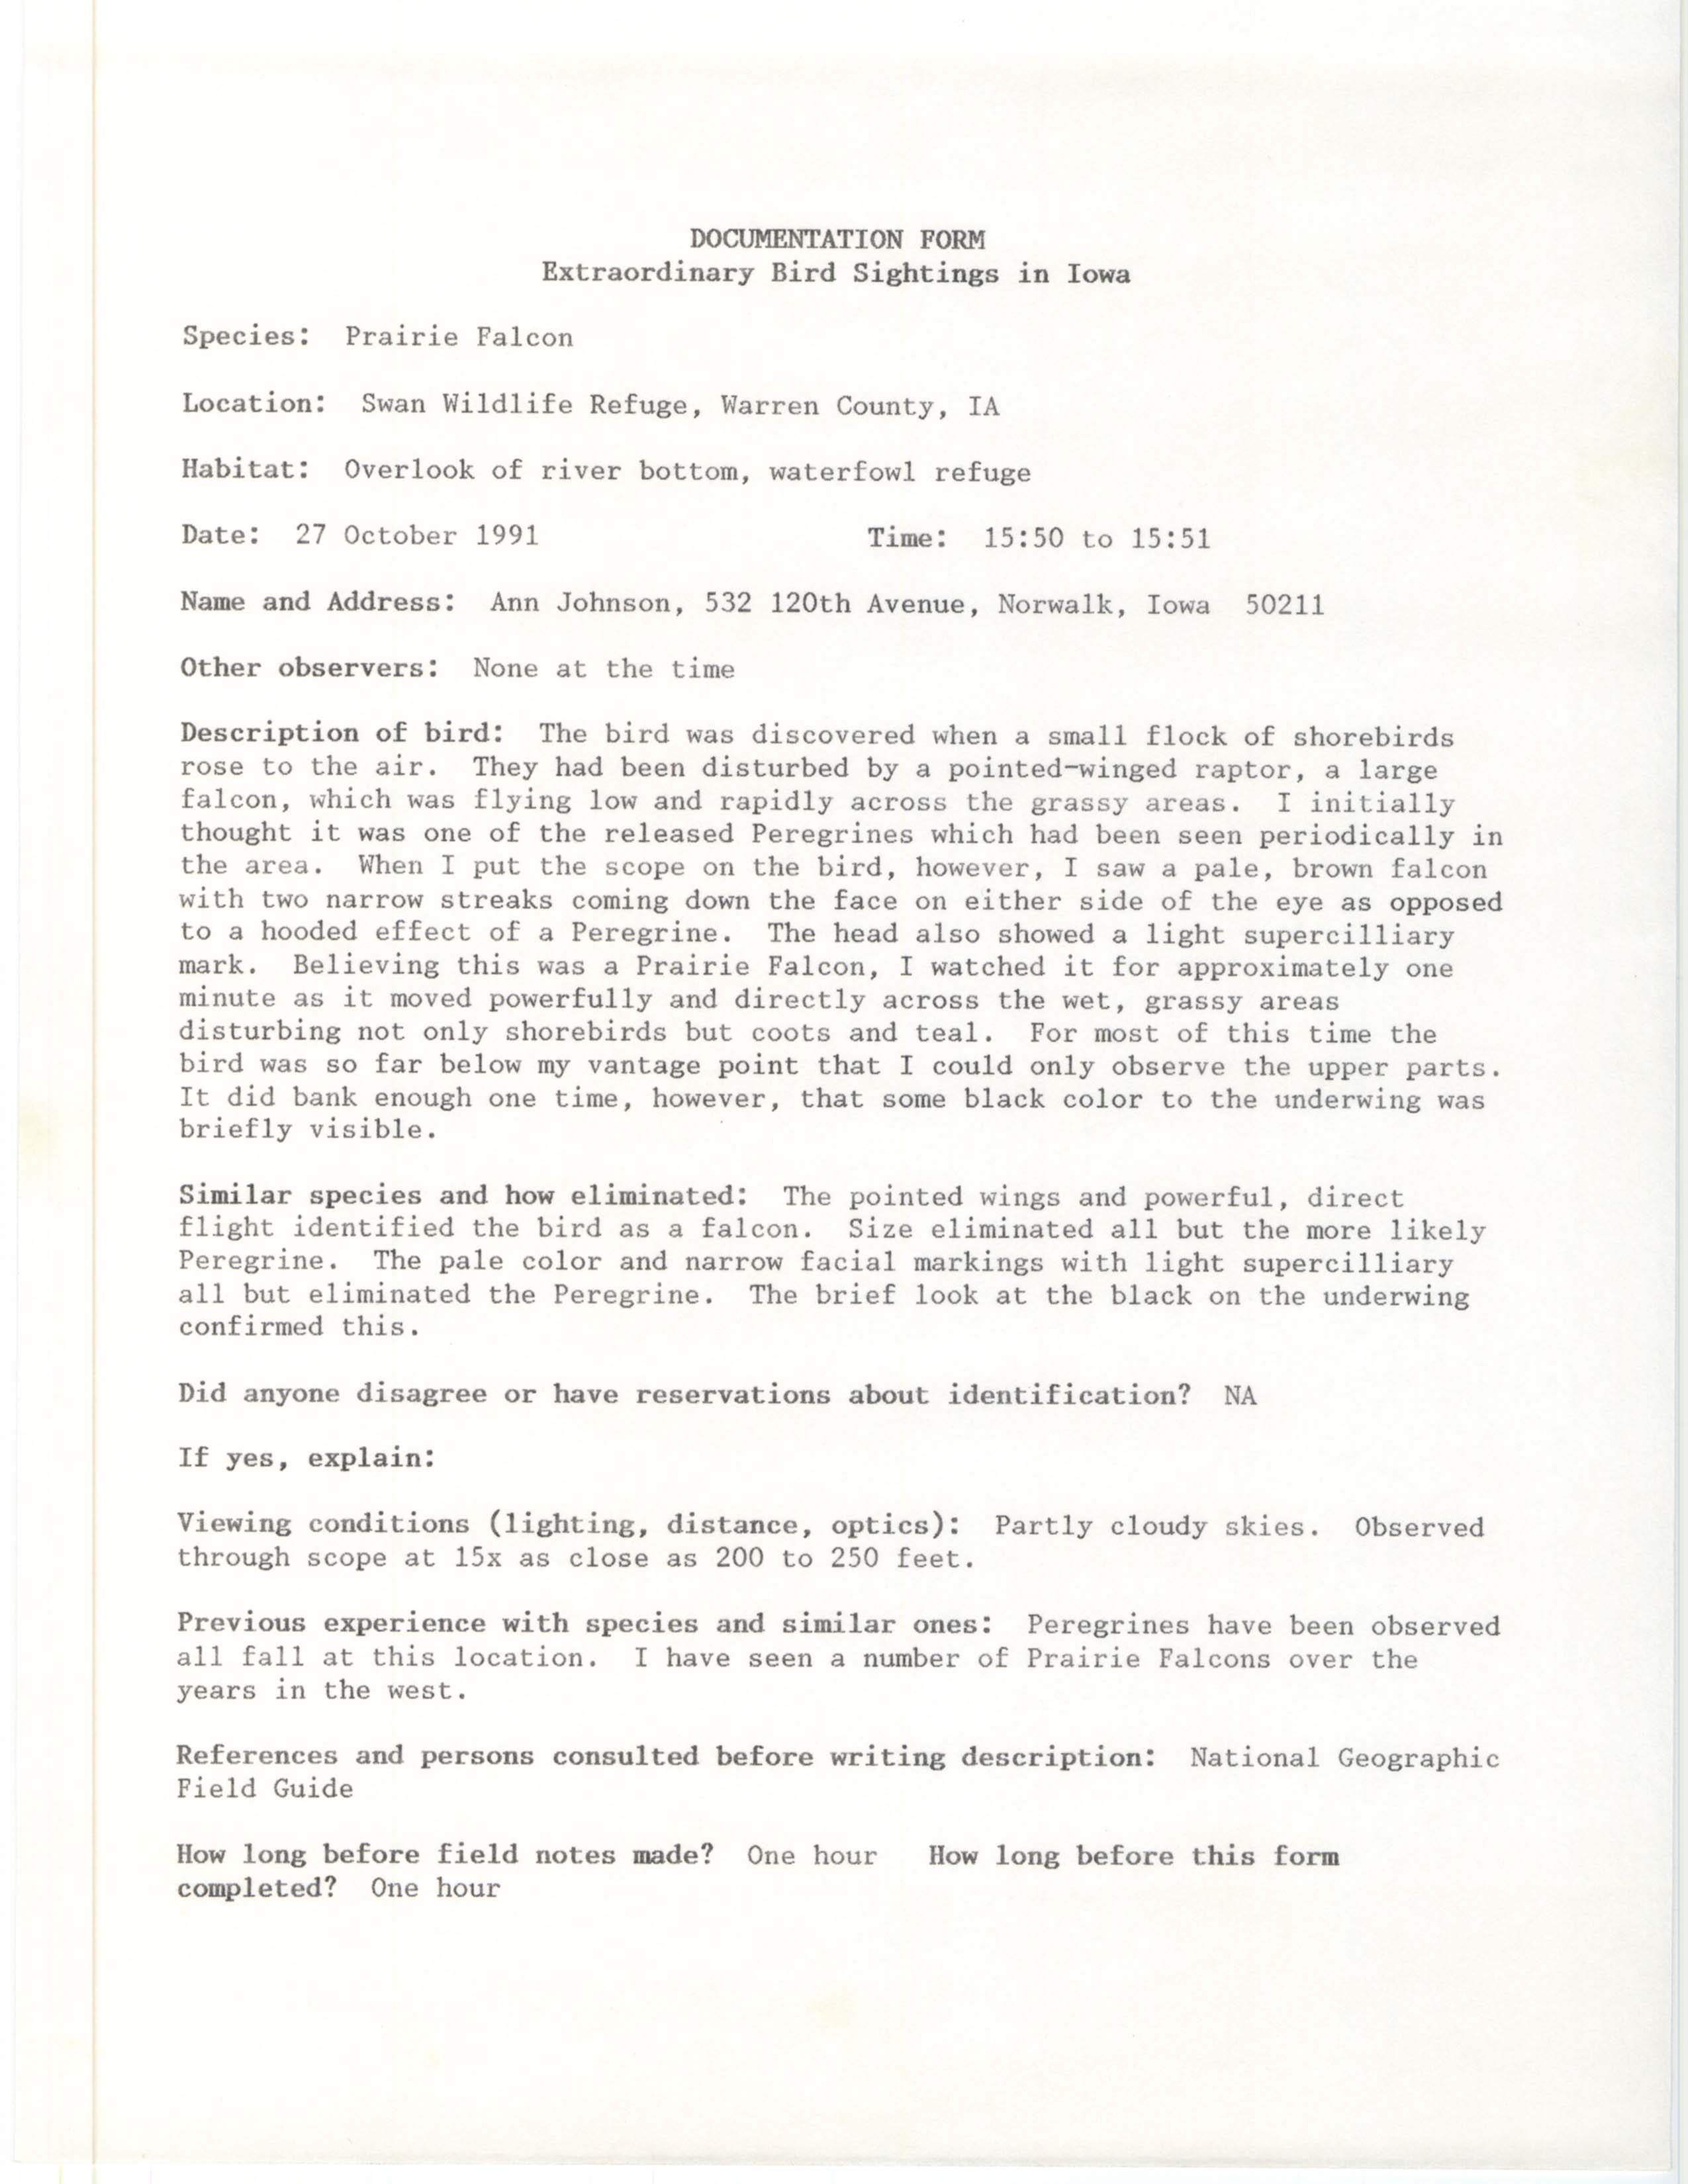 Rare bird documentation form for Prairie Falcon at Swan Wildlife Refuge, 1991